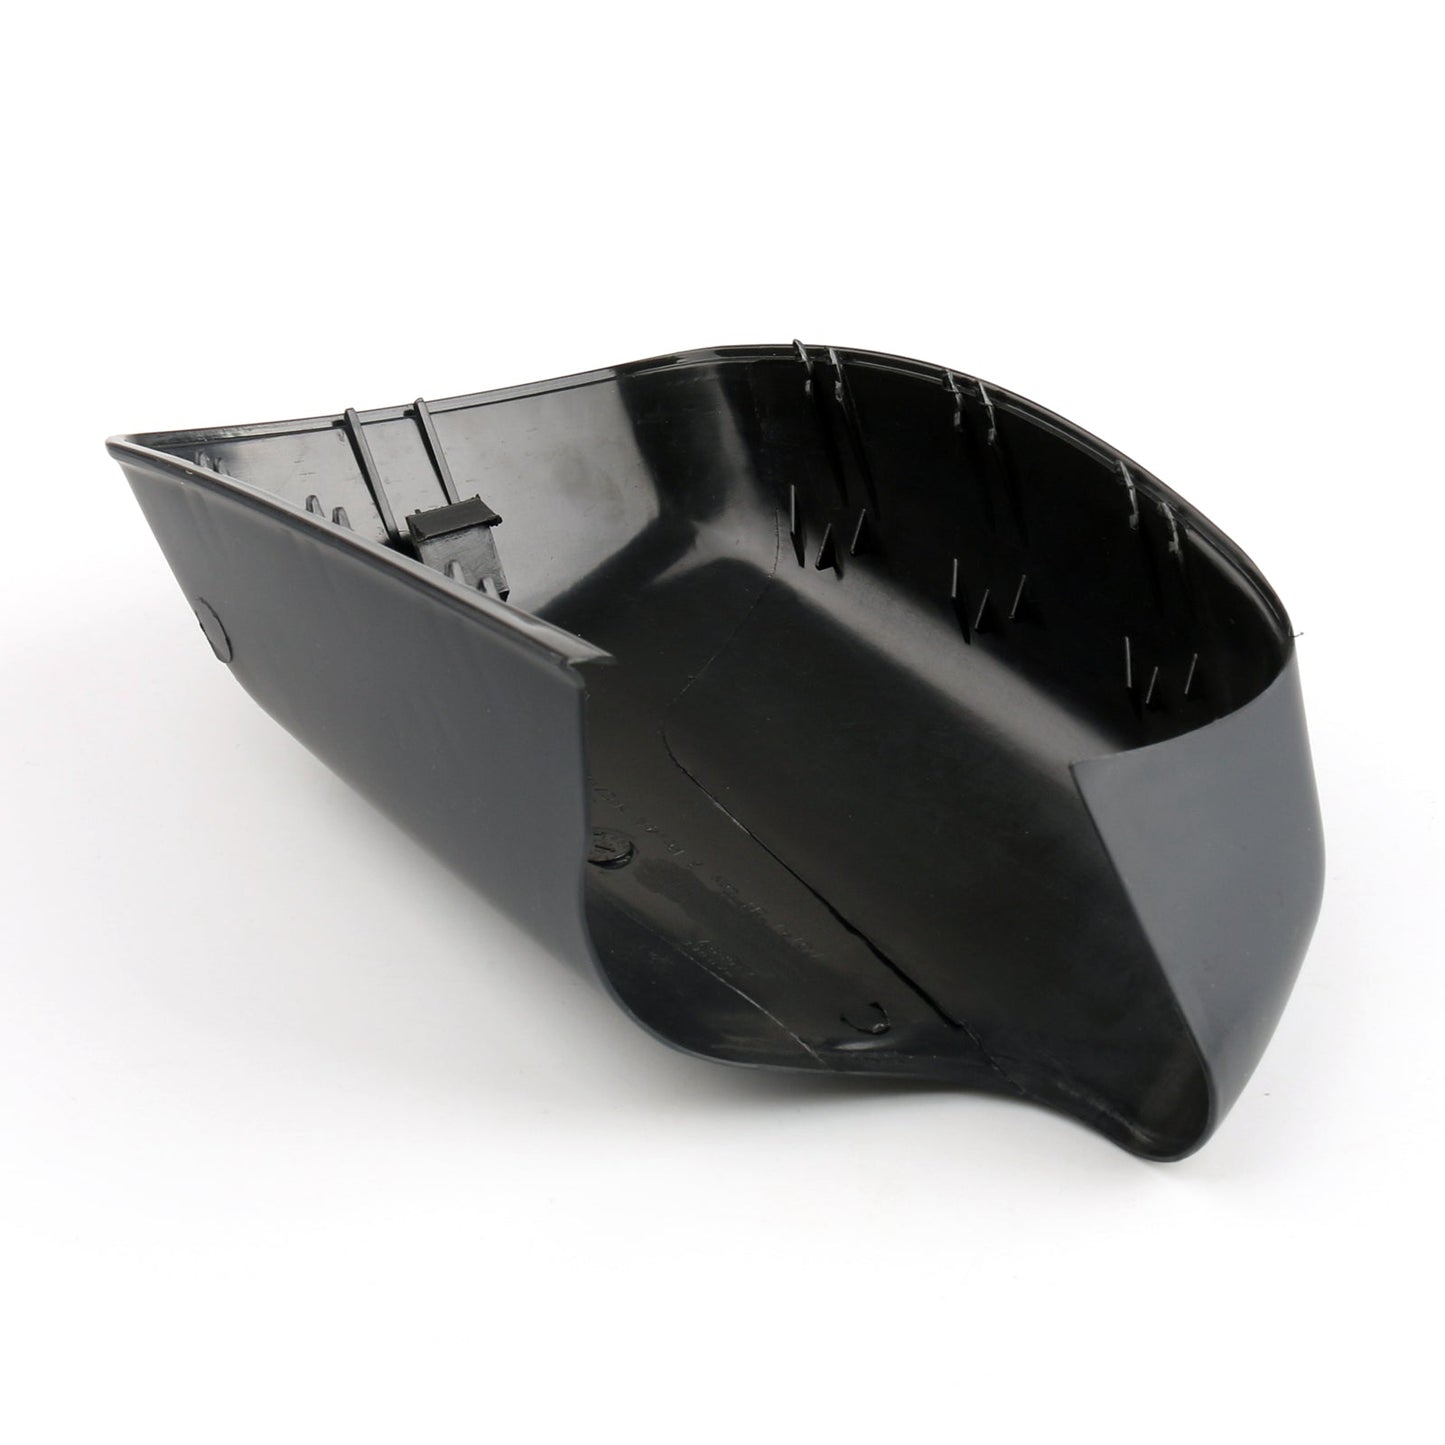 Gloss Black Mirror Cap Cover Trim Accessories for BMW X5 E53 00-01 X5 3.0i 04-06